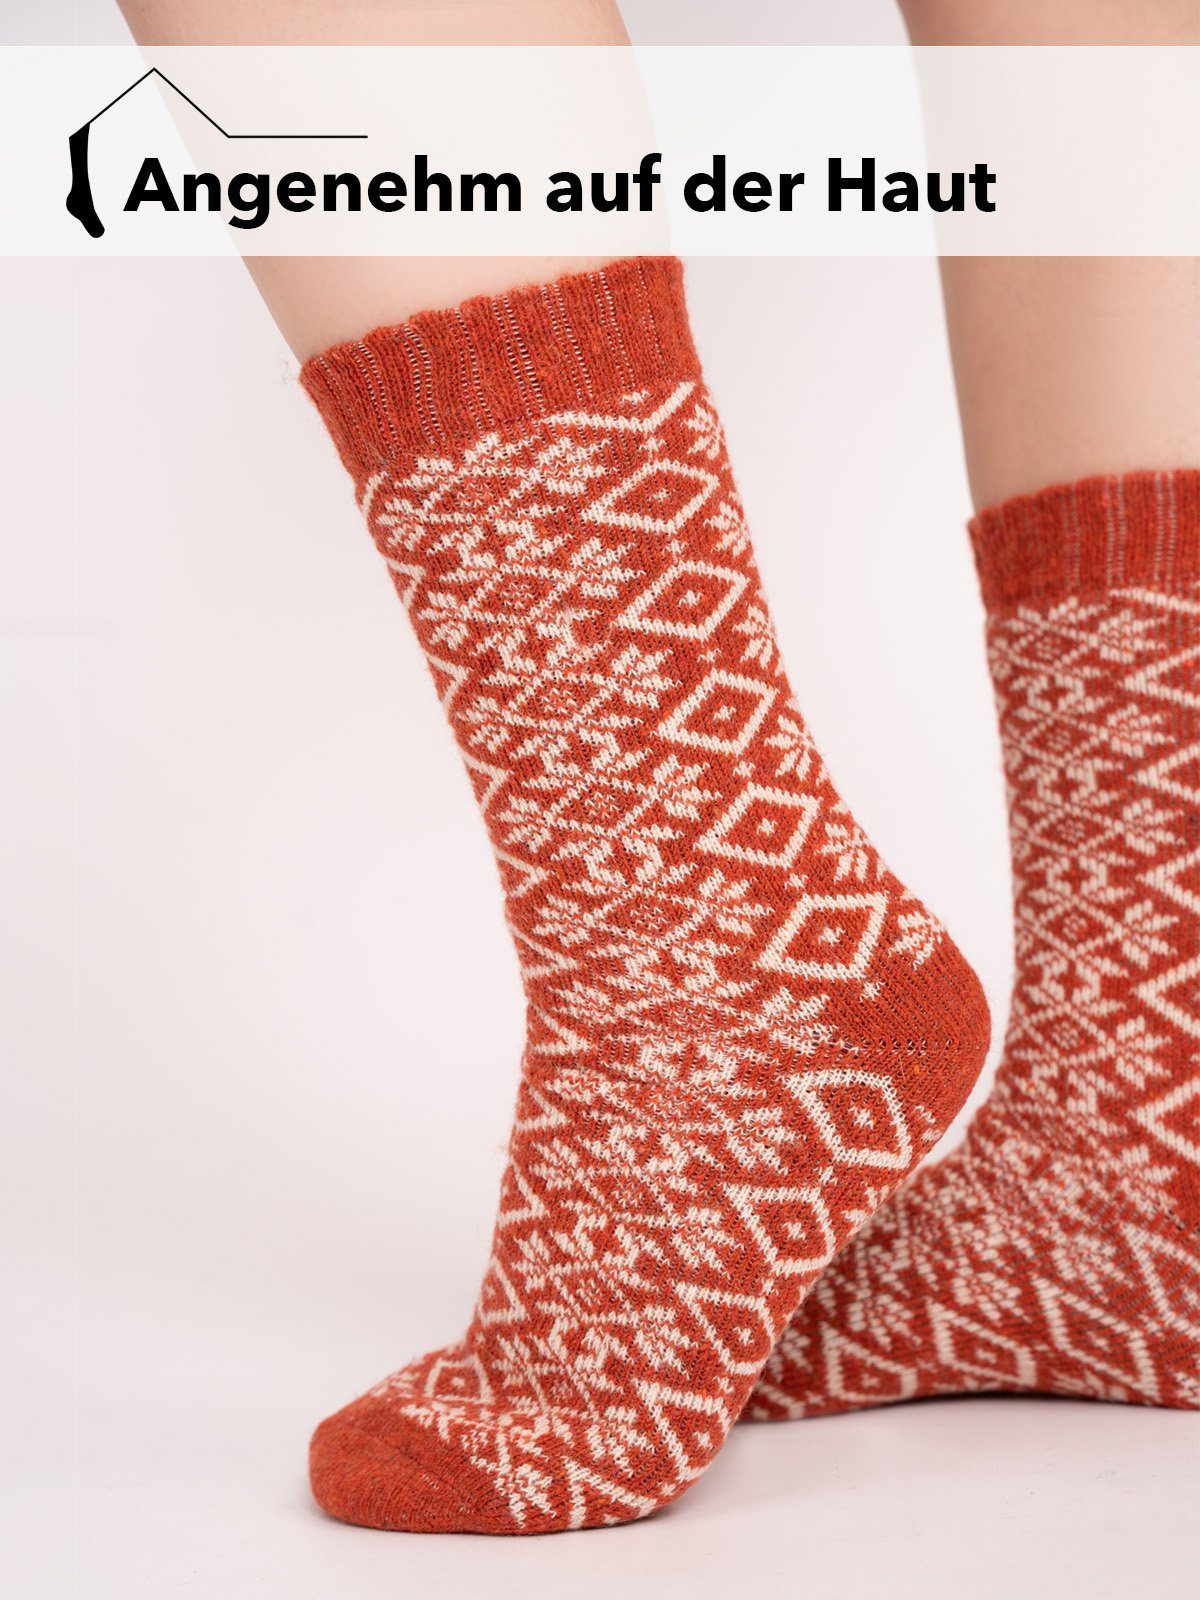 Rot Herren Warm mit Socken In 45% Wolle Bunten Mit Dick Damen Design HomeOfSocks & Socken Wollanteil Dicke Für Hyggelig Socken Hohem Hygge